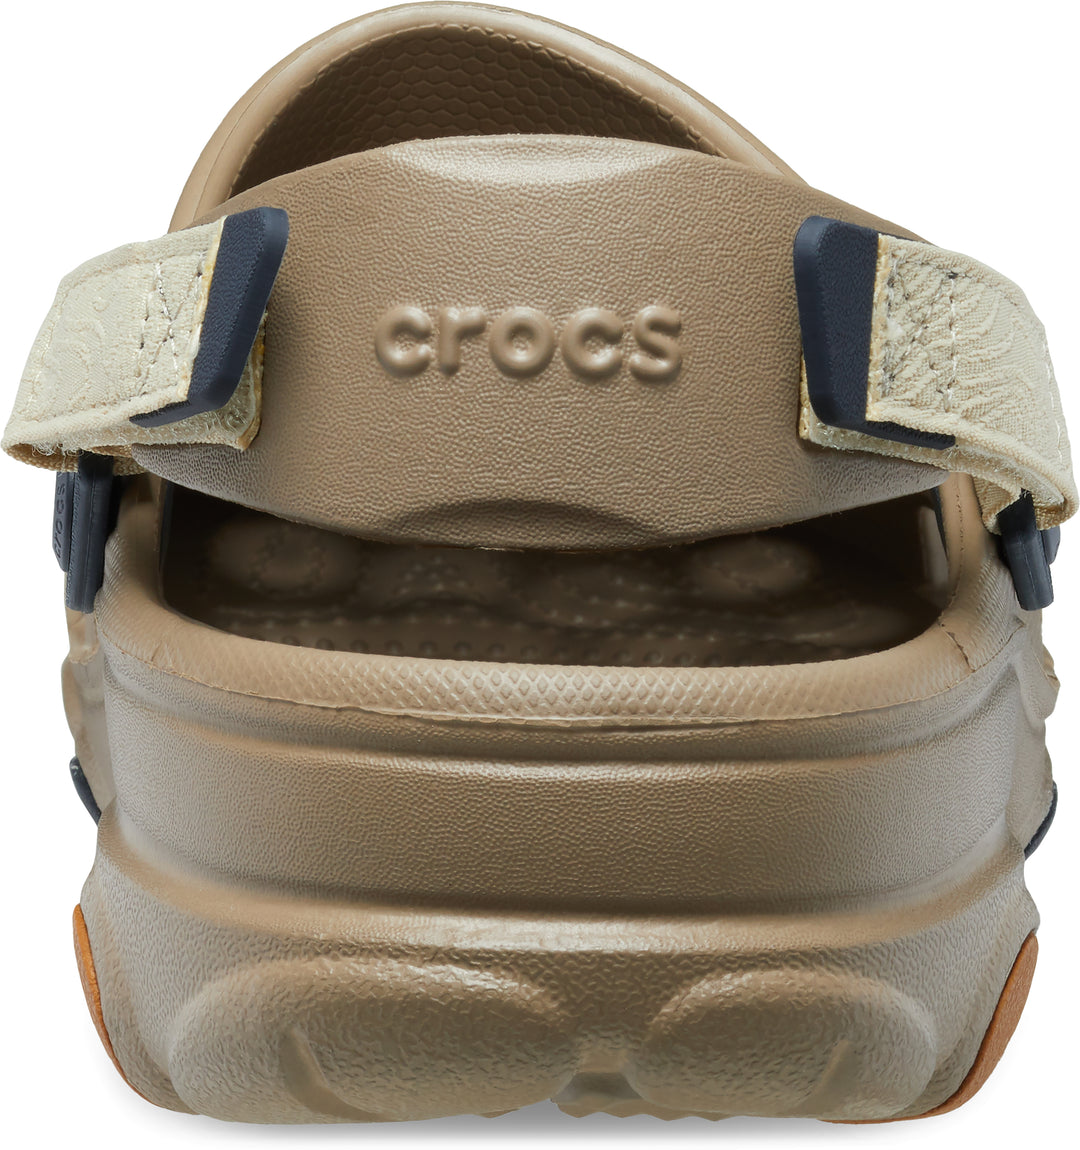 Crocs Adults Unisex All Terrain Clogs In Khaki/Multi